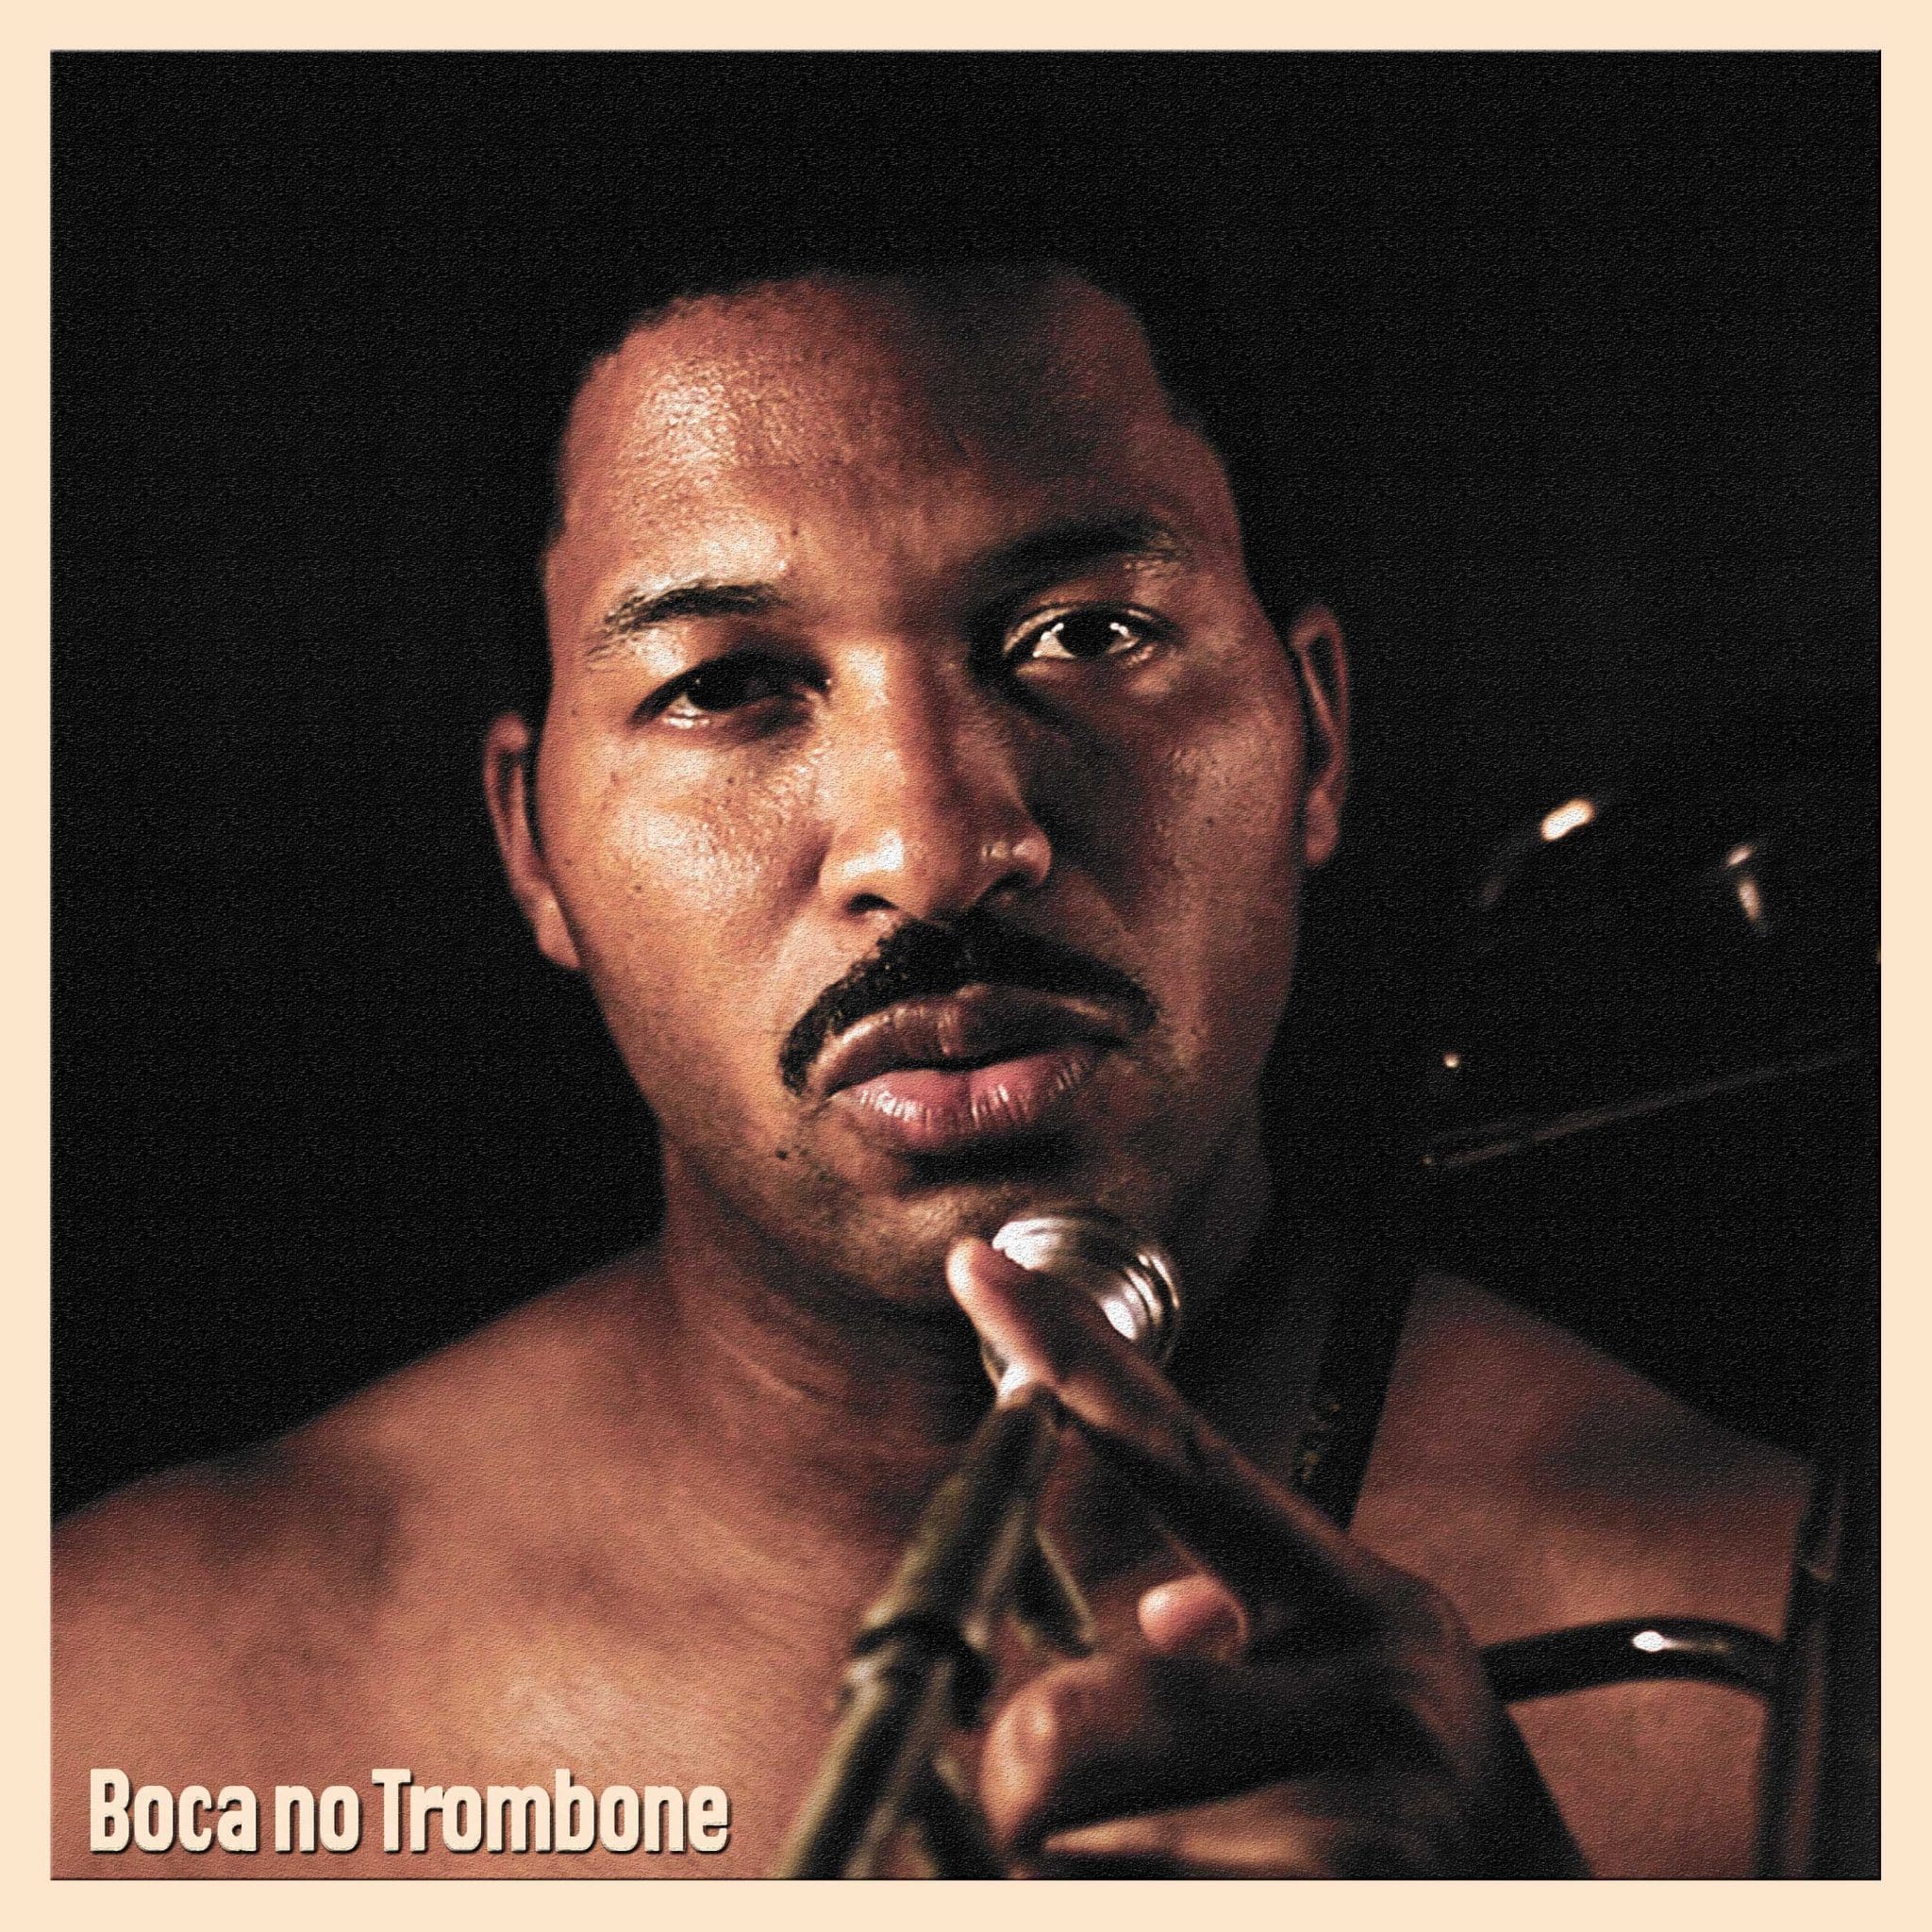 revistaprosaversoearte.com - 'Boca no Trombone', terceiro álbum do trombonista Josiel Konrad